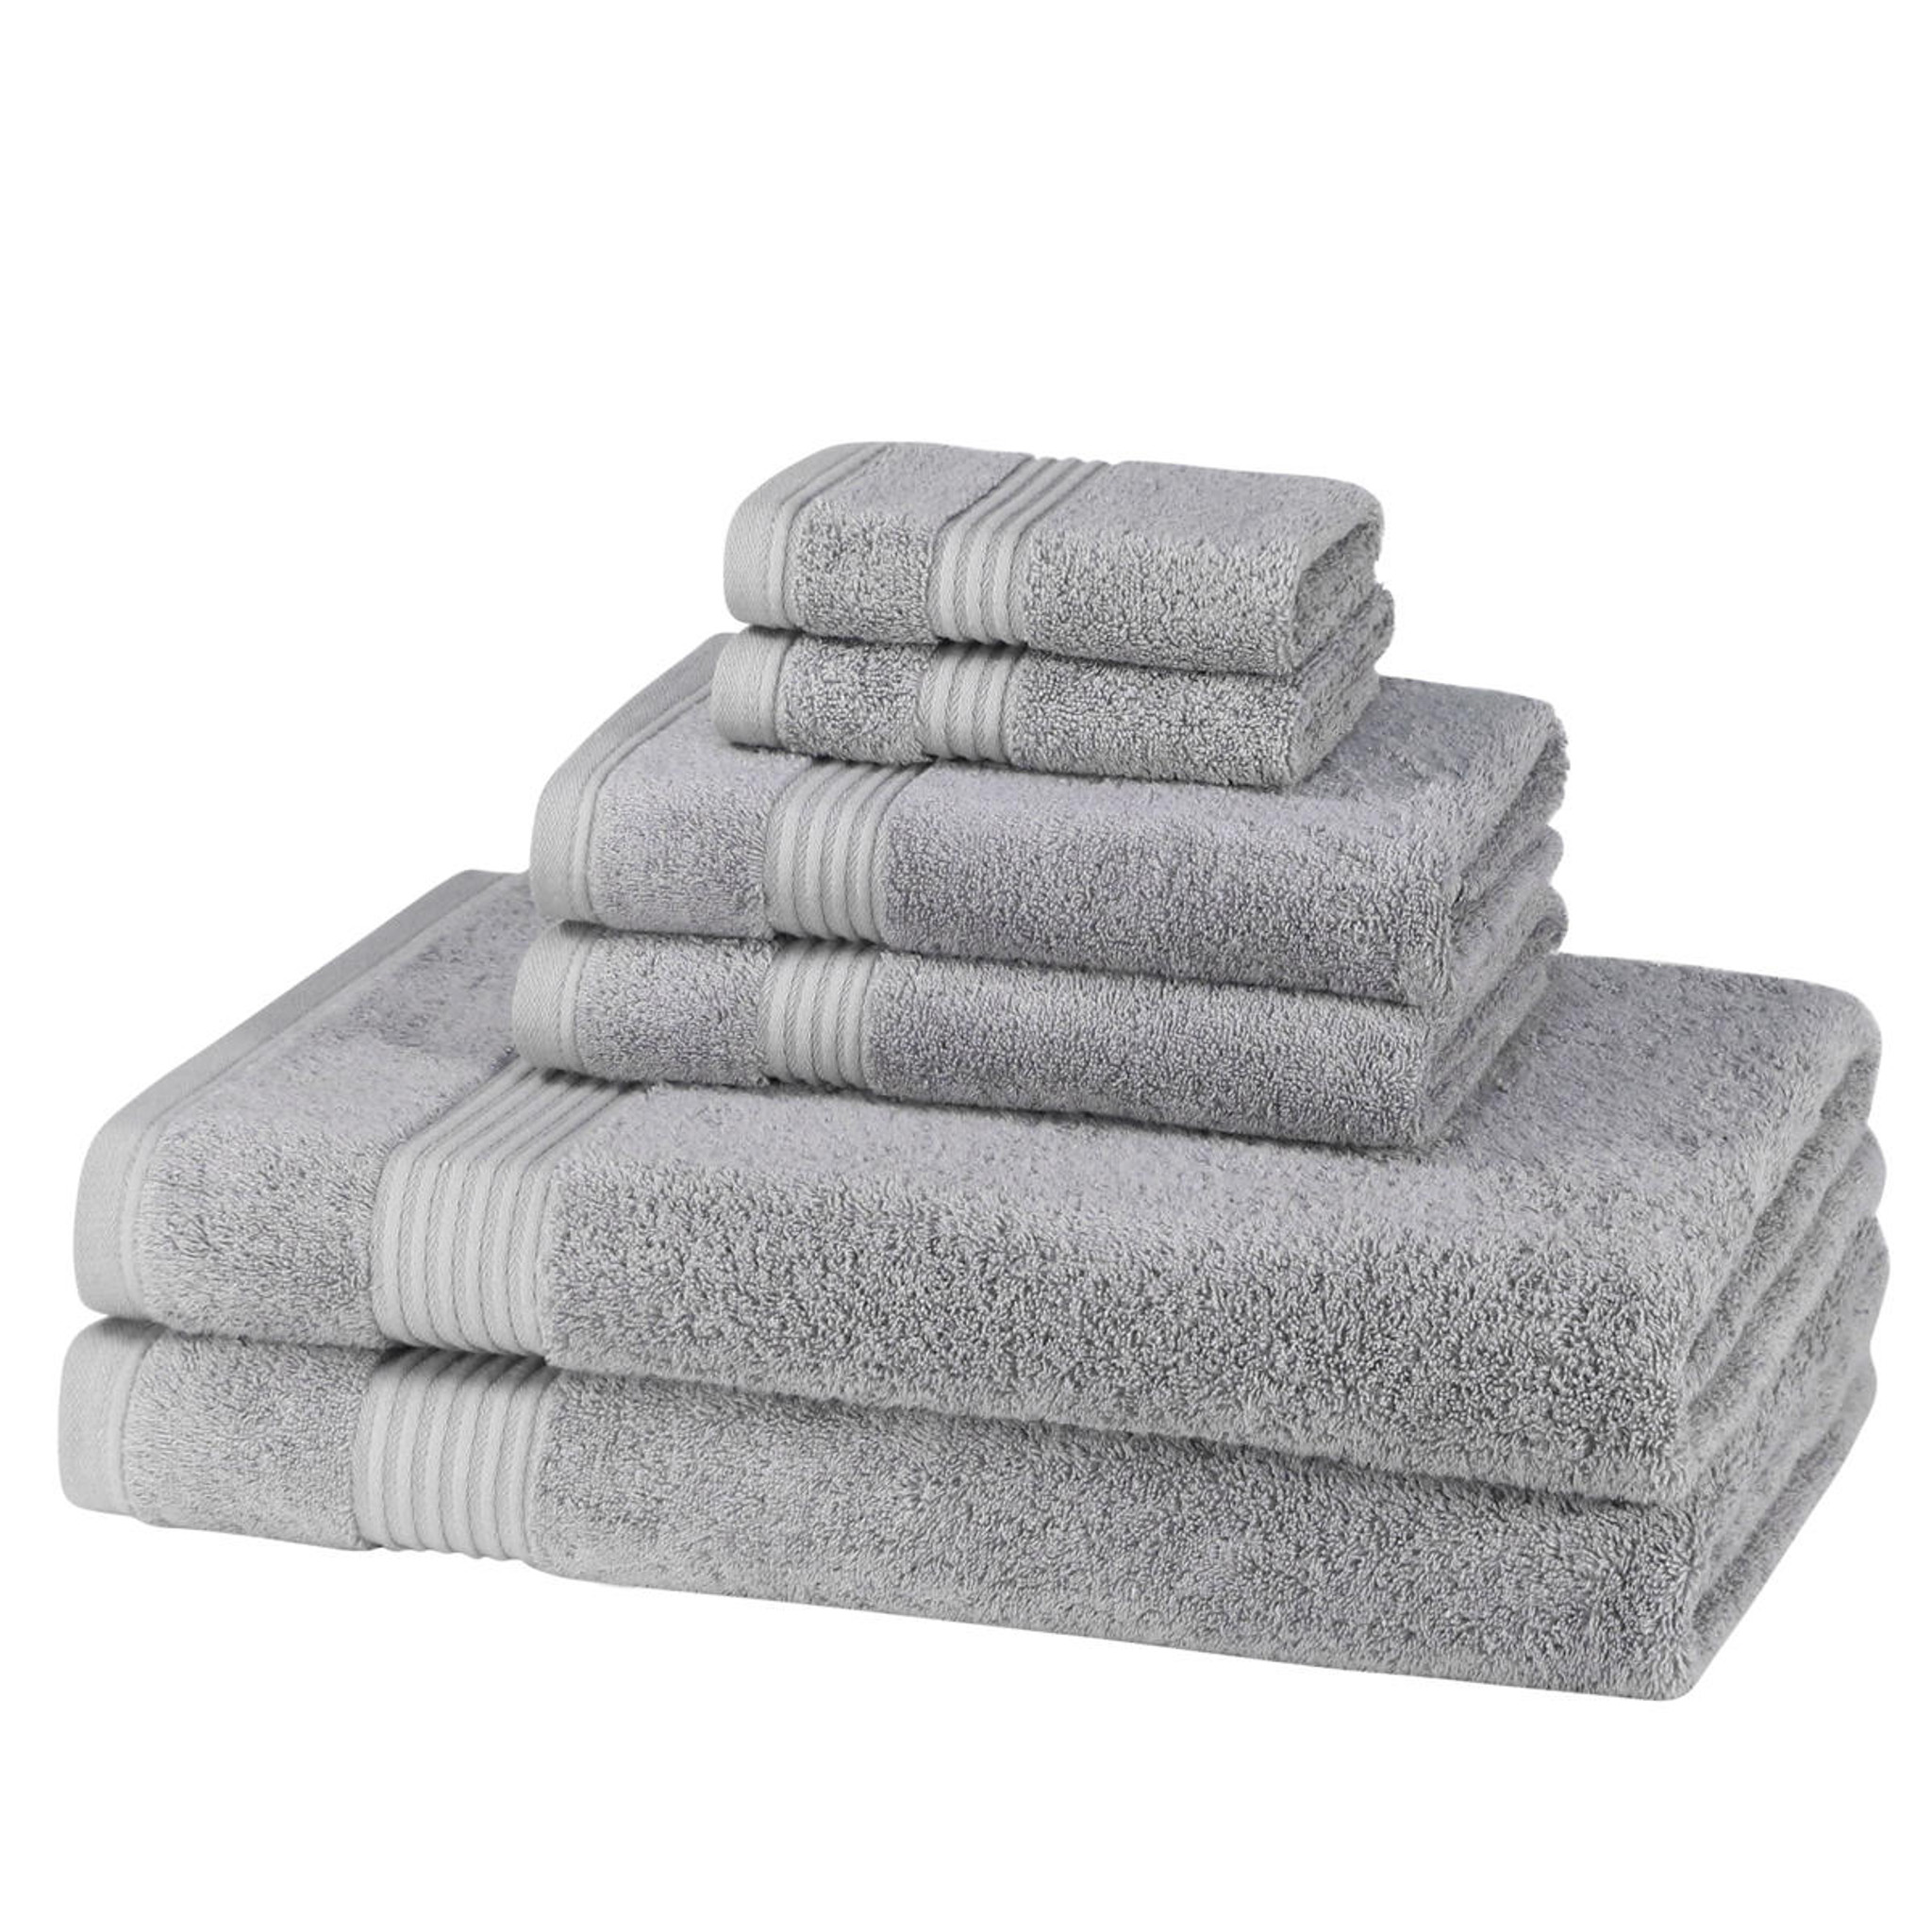 6 Piece 700GSM Bamboo Towel Set - 2 Face Cloths, 2 Hand Towels, 2 Bath ...